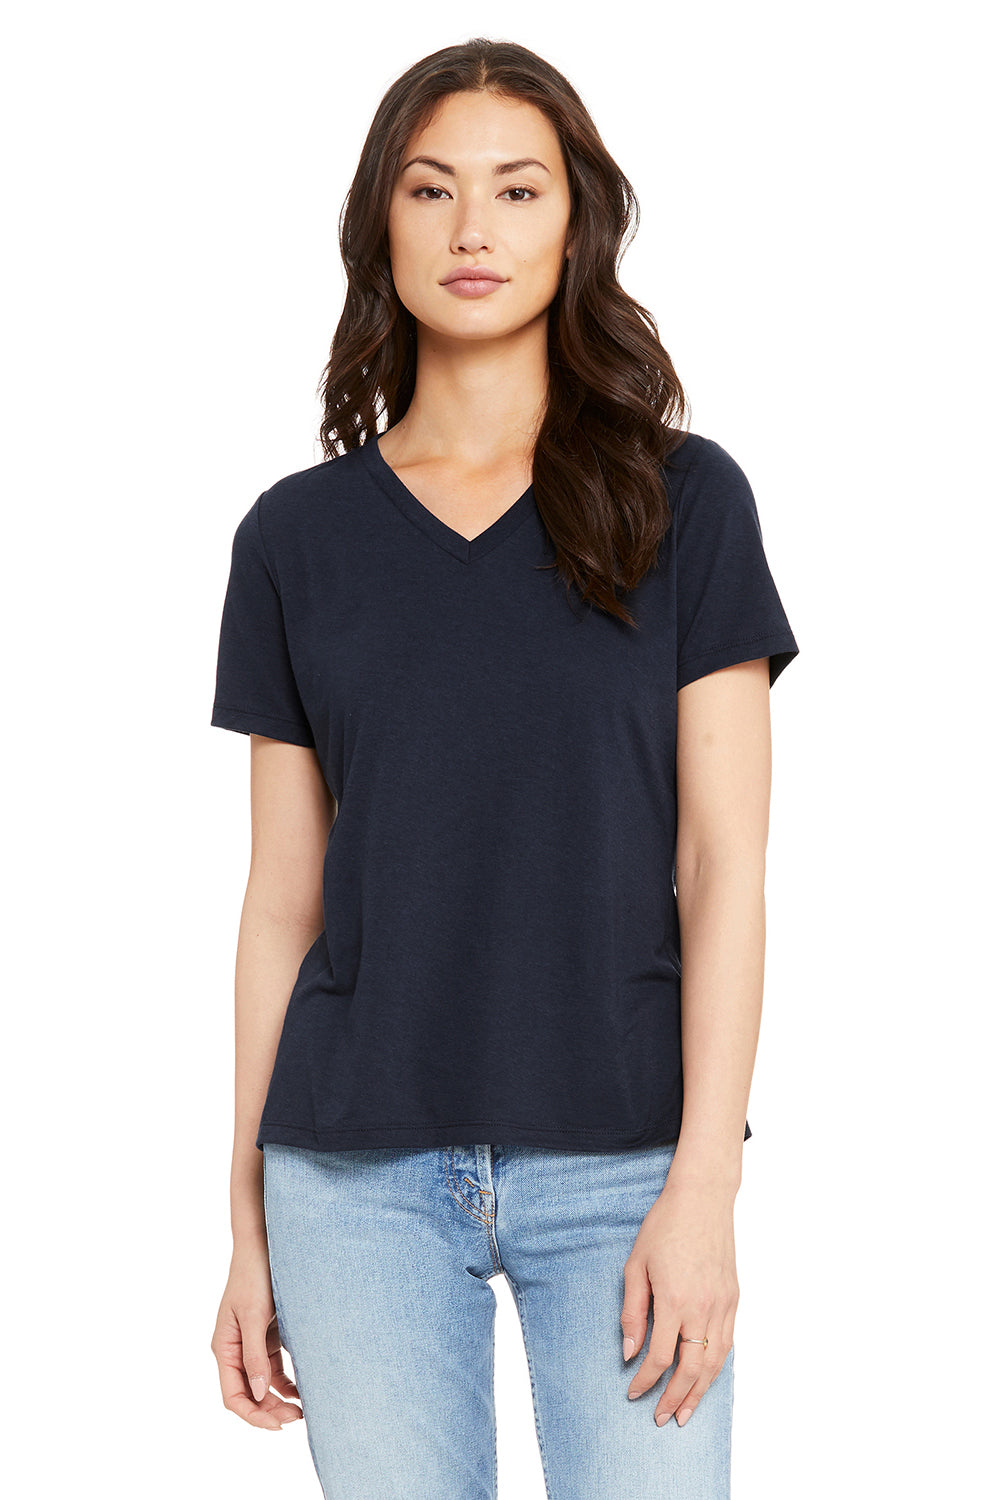 Bella + Canvas BC6415 Womens Short Sleeve V-Neck T-Shirt Solid Navy Blue Model 3Q